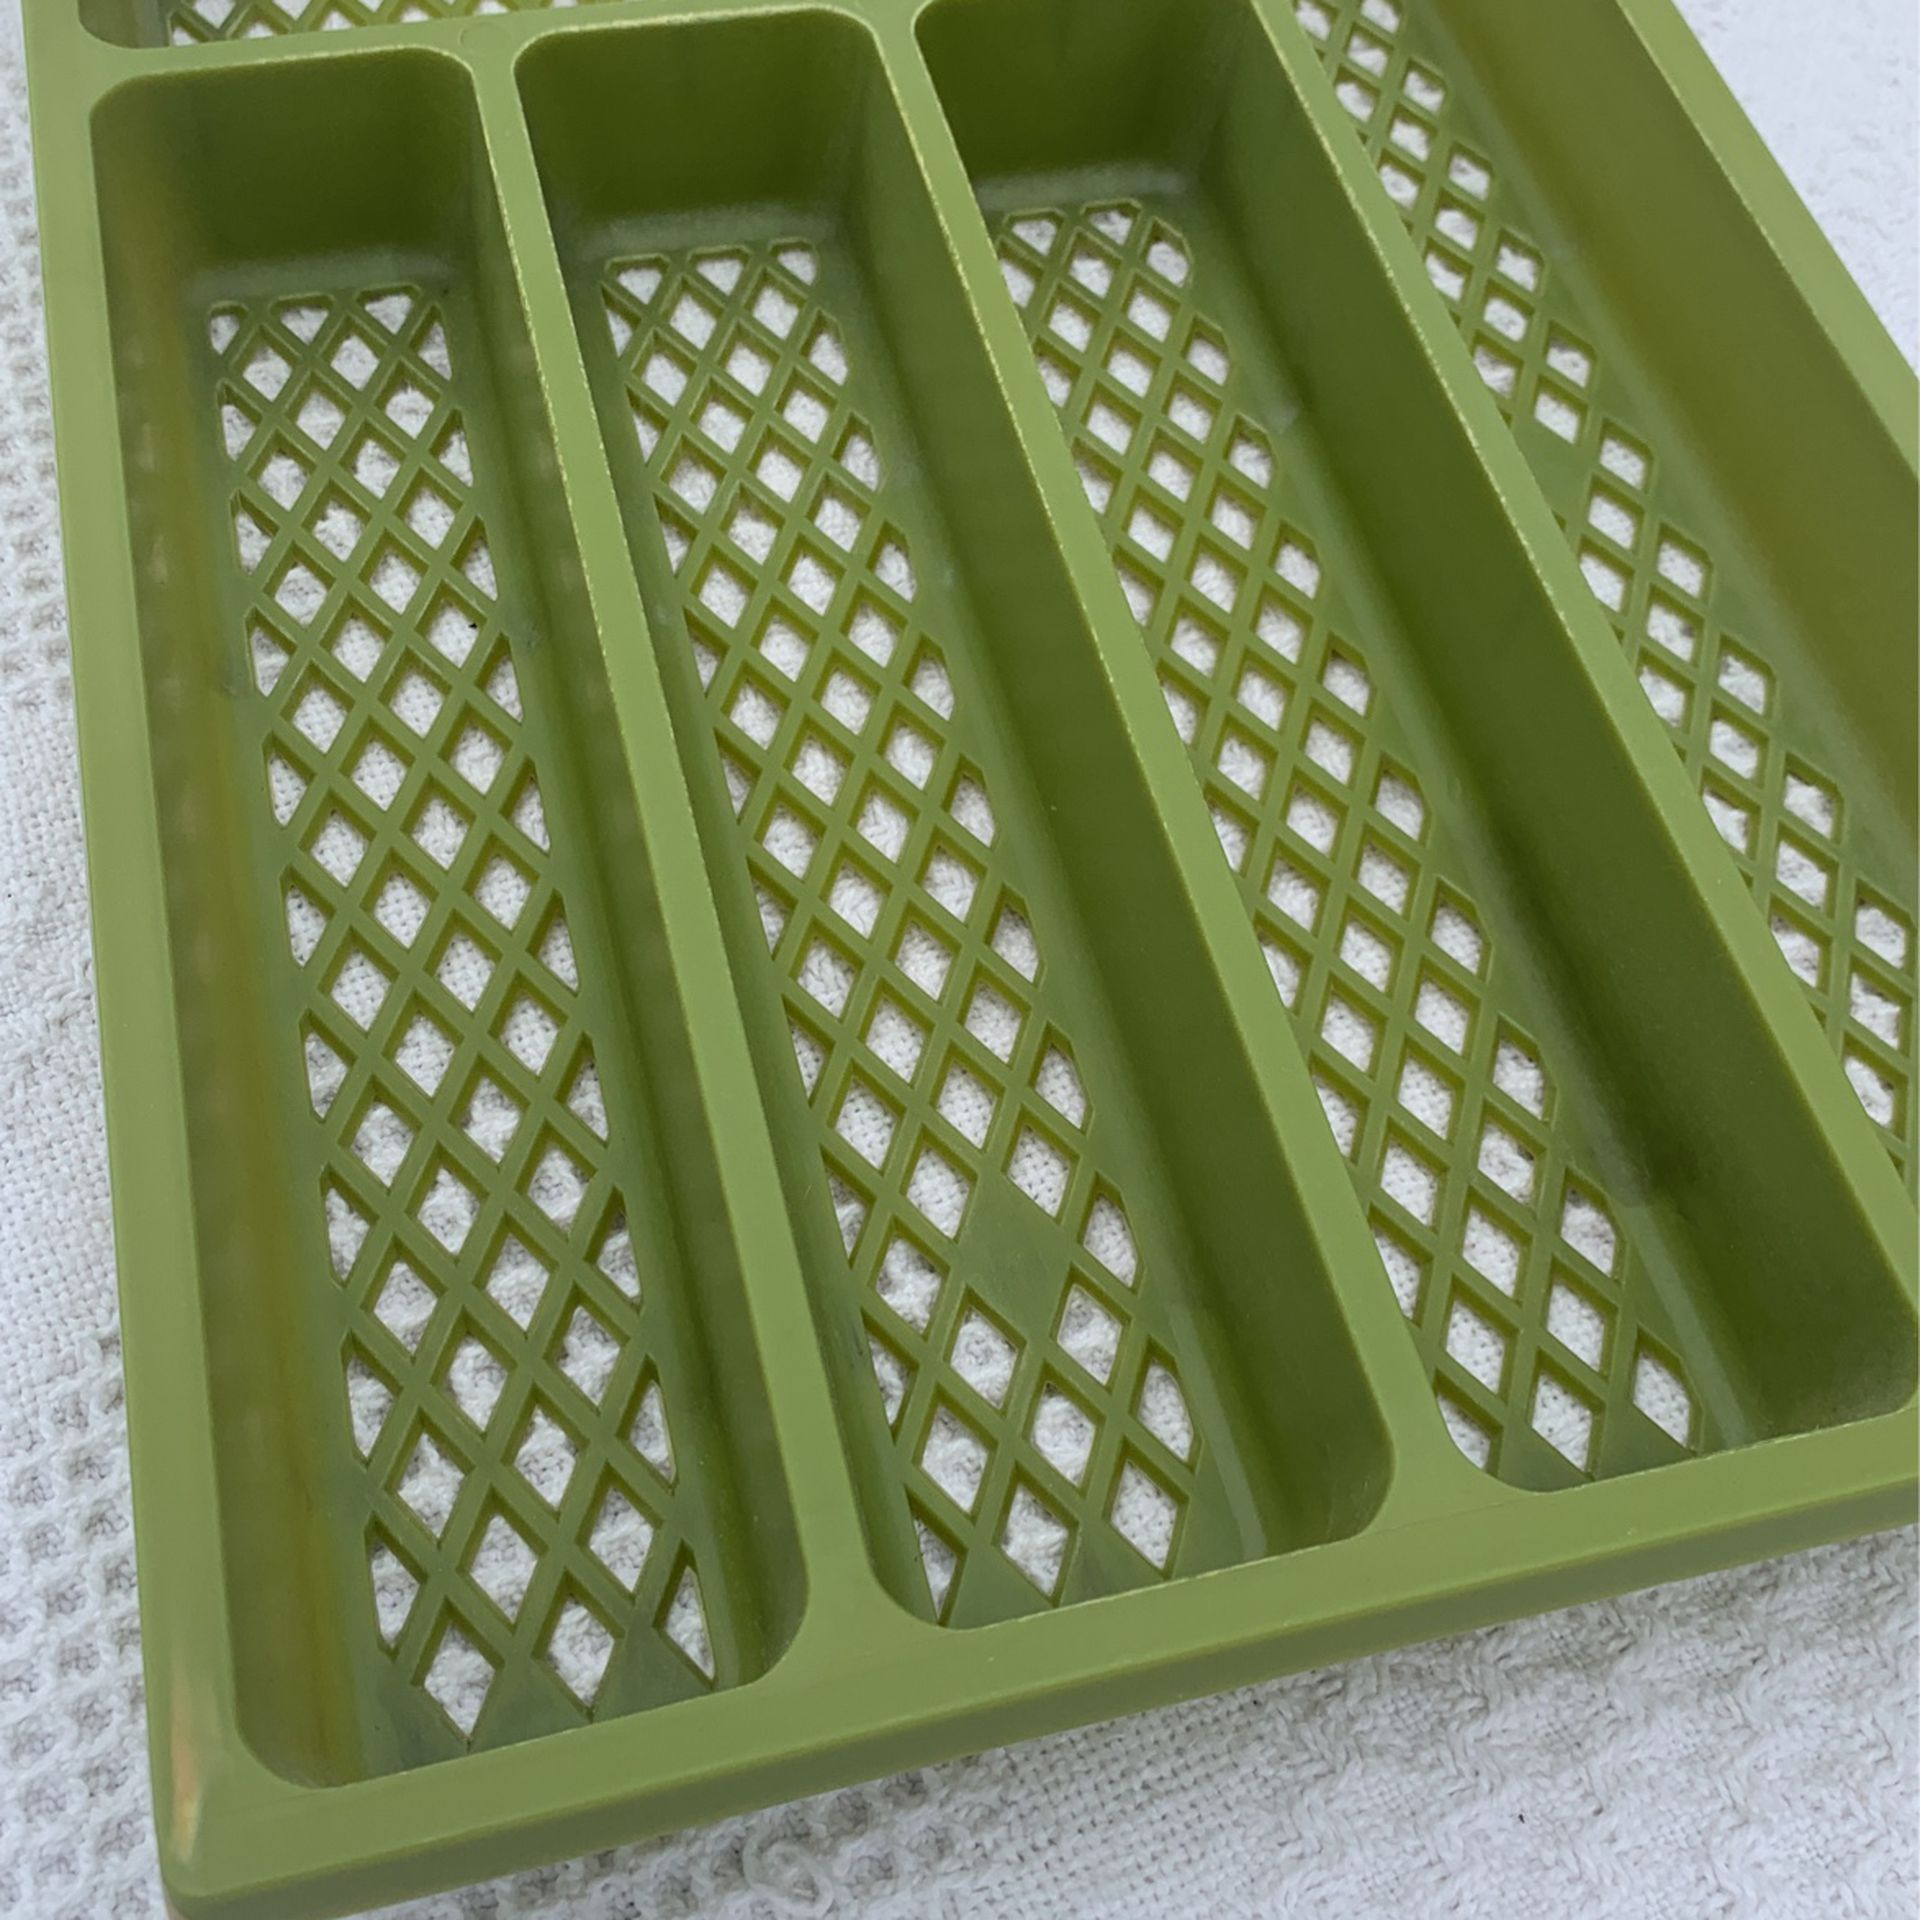 Vintage Plastic Mesh Silverware Utensil Tray Mid Century Modern Flatware Green